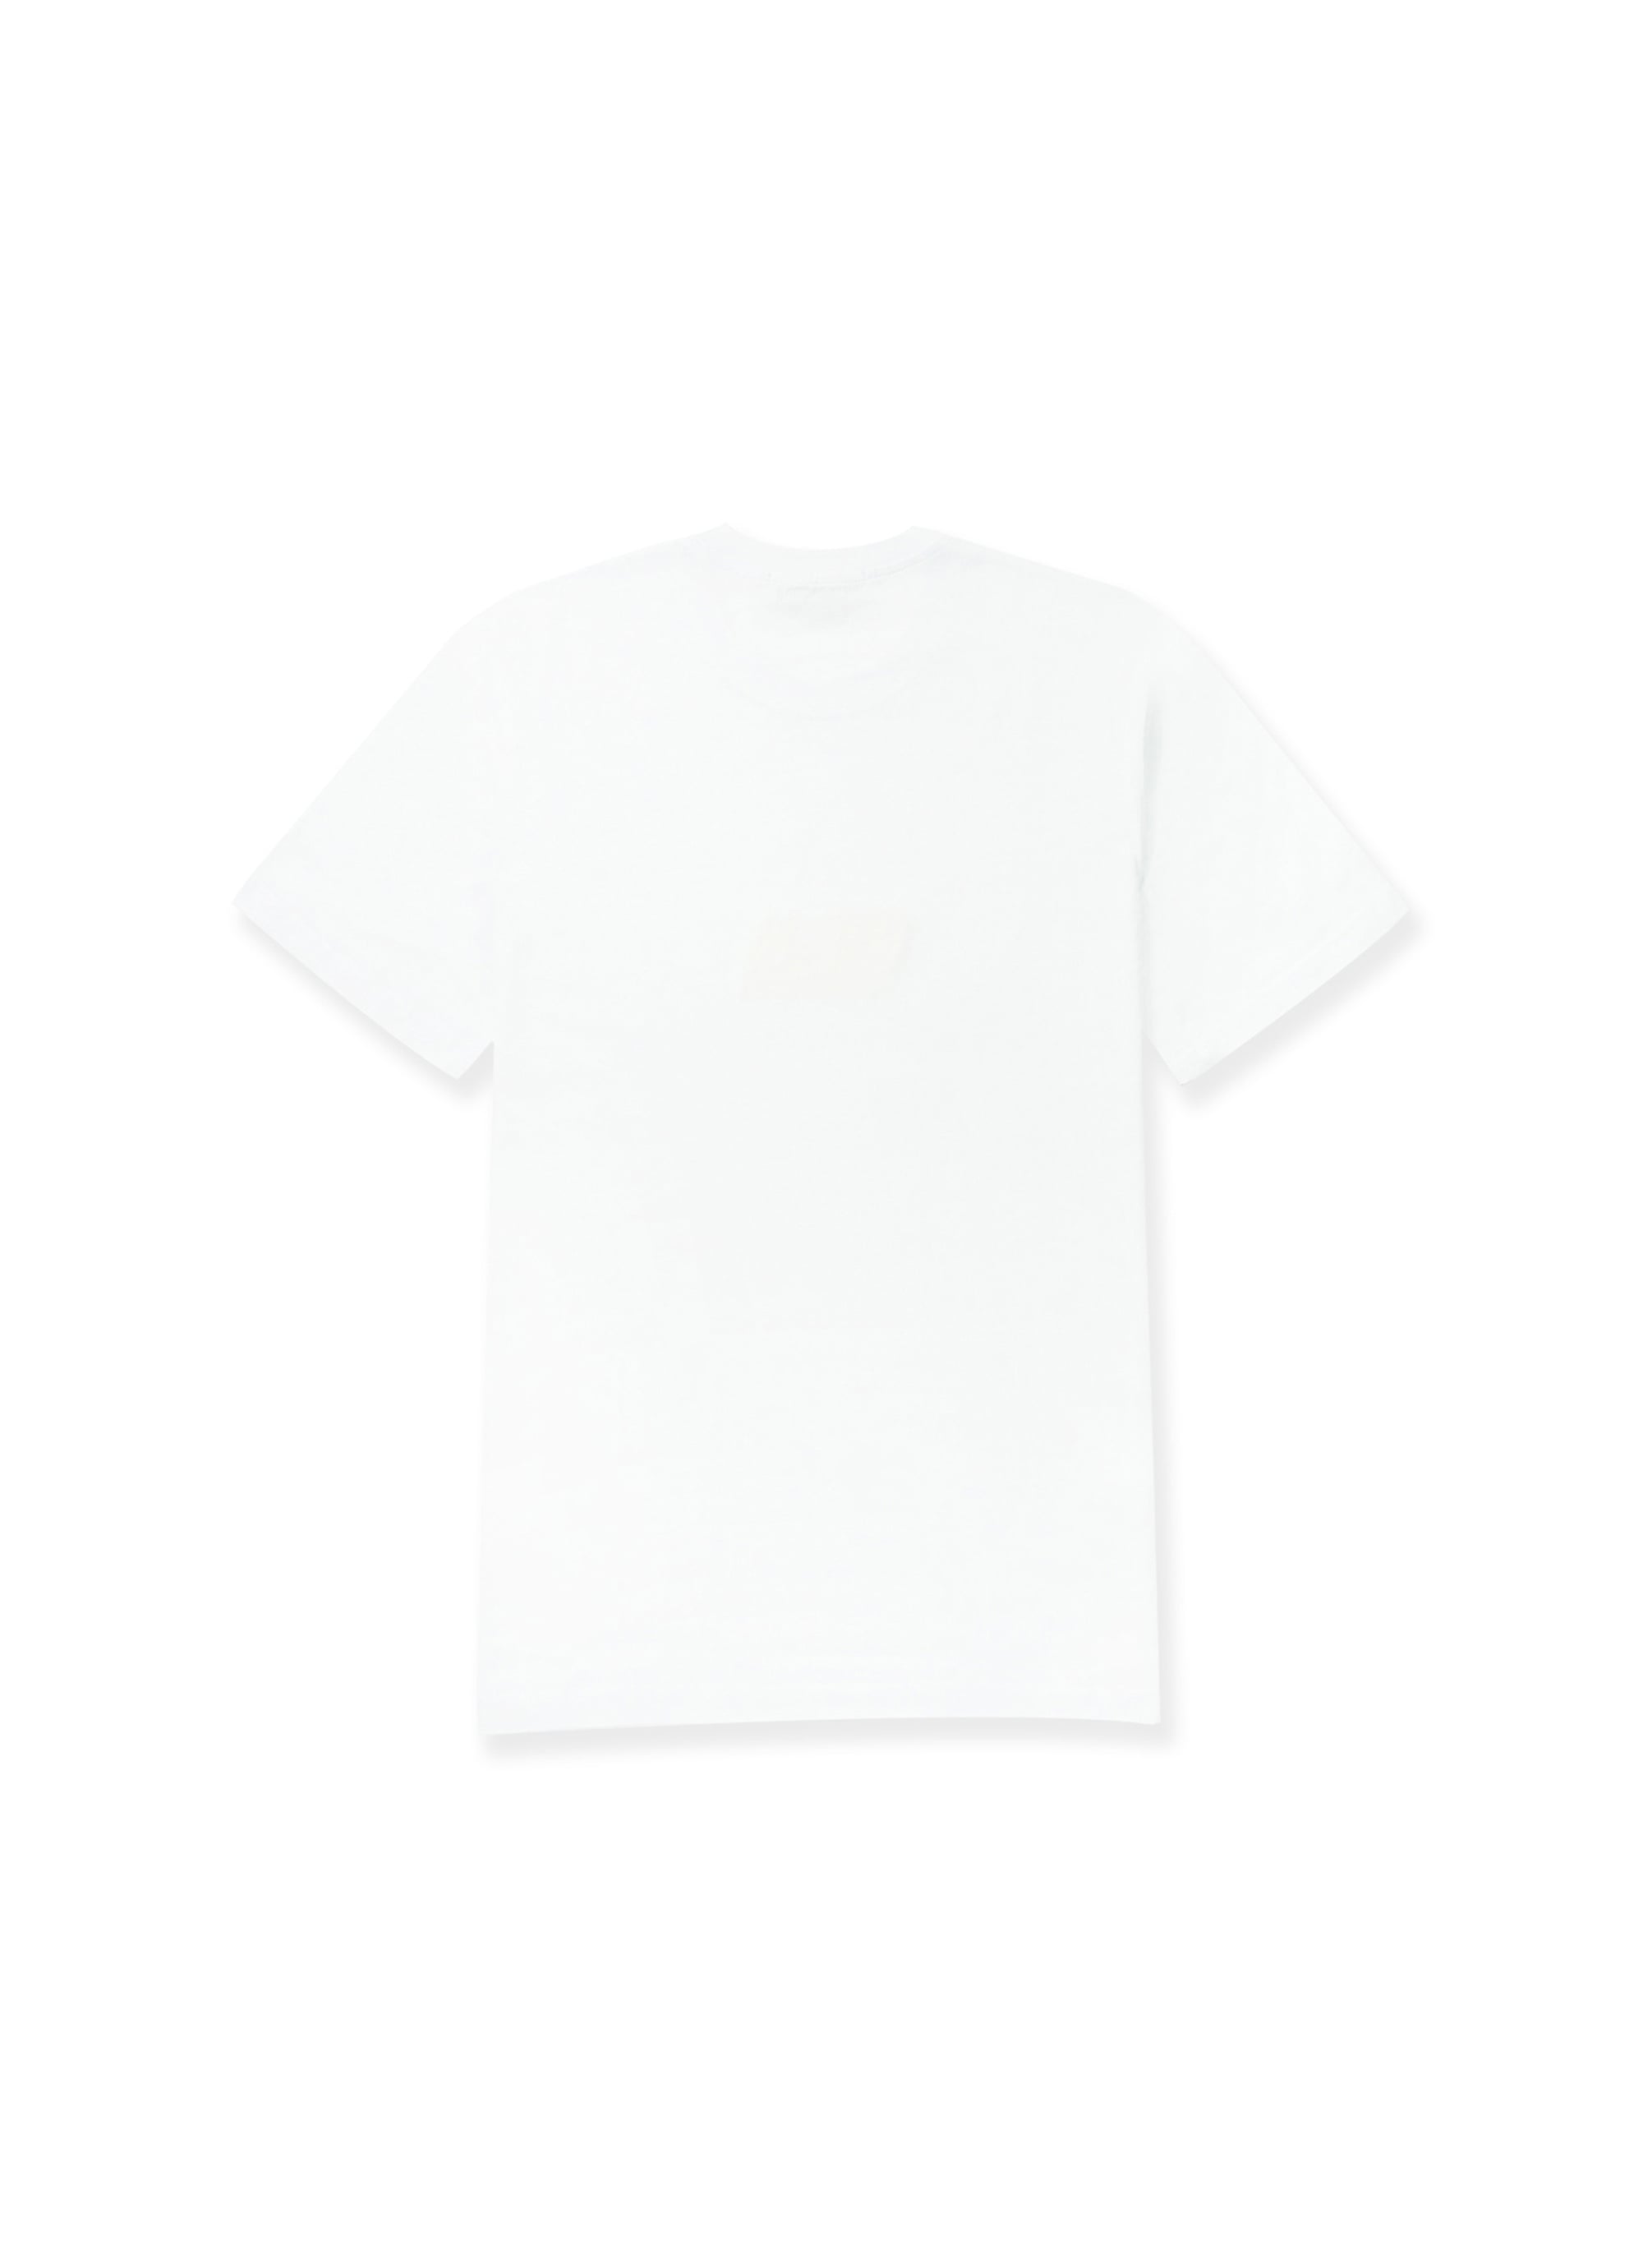 MSGM ERROR［404］ネオンプリント Tシャツ  詳細画像 ホワイト×イエロー 2